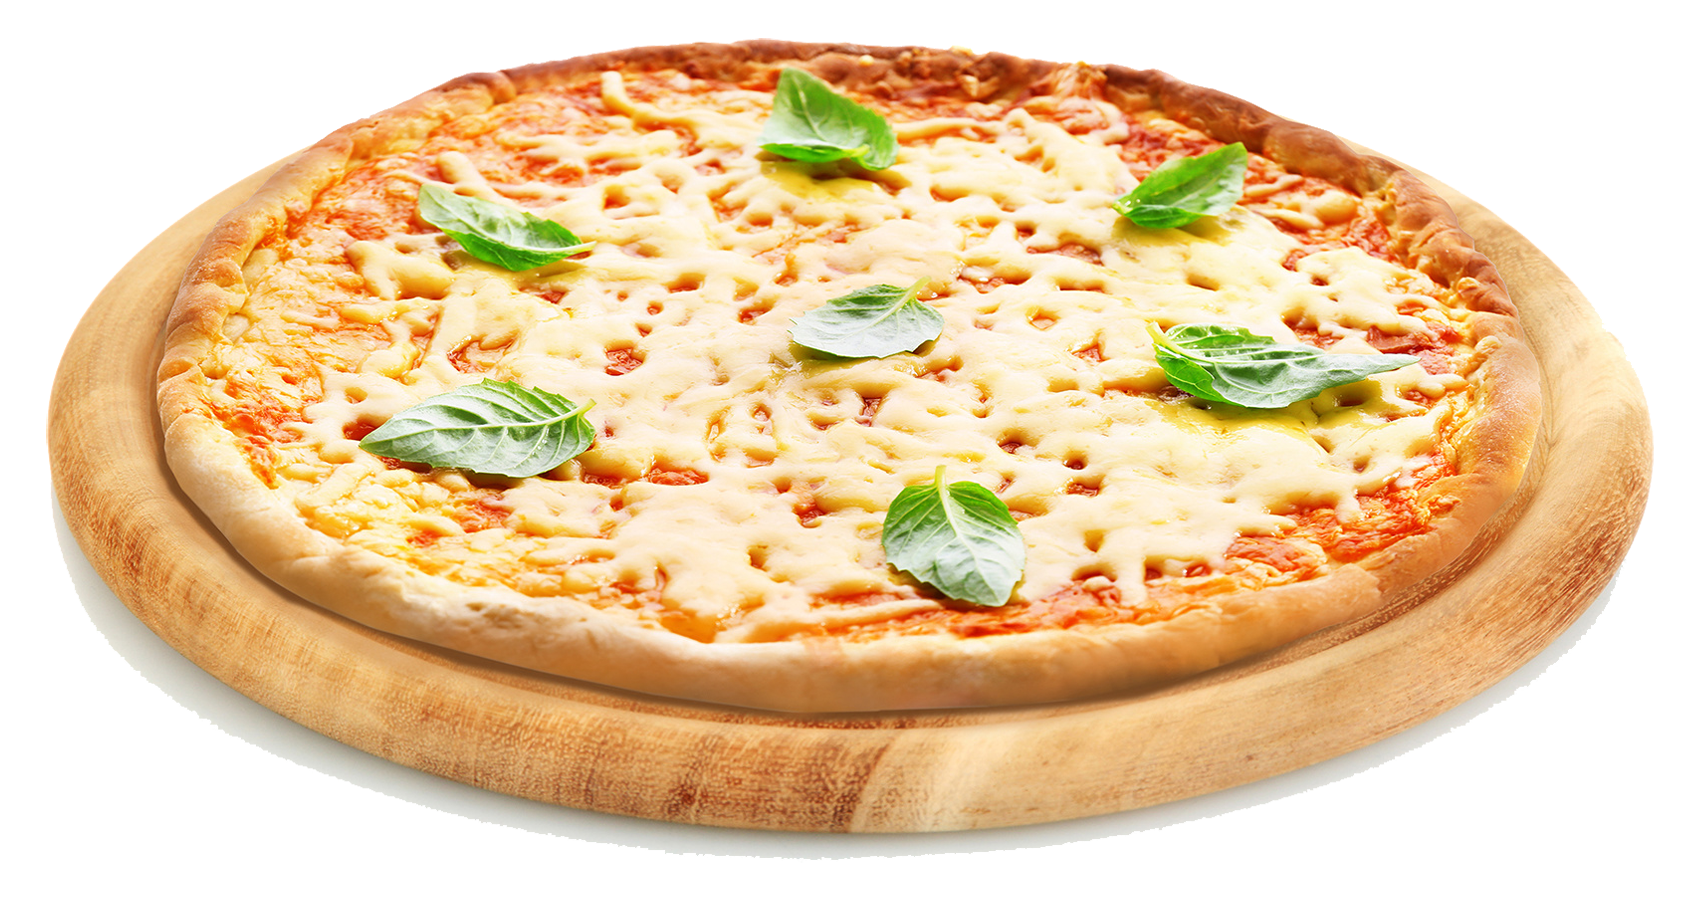 пепперони пицца фото на белом фоне фото 105